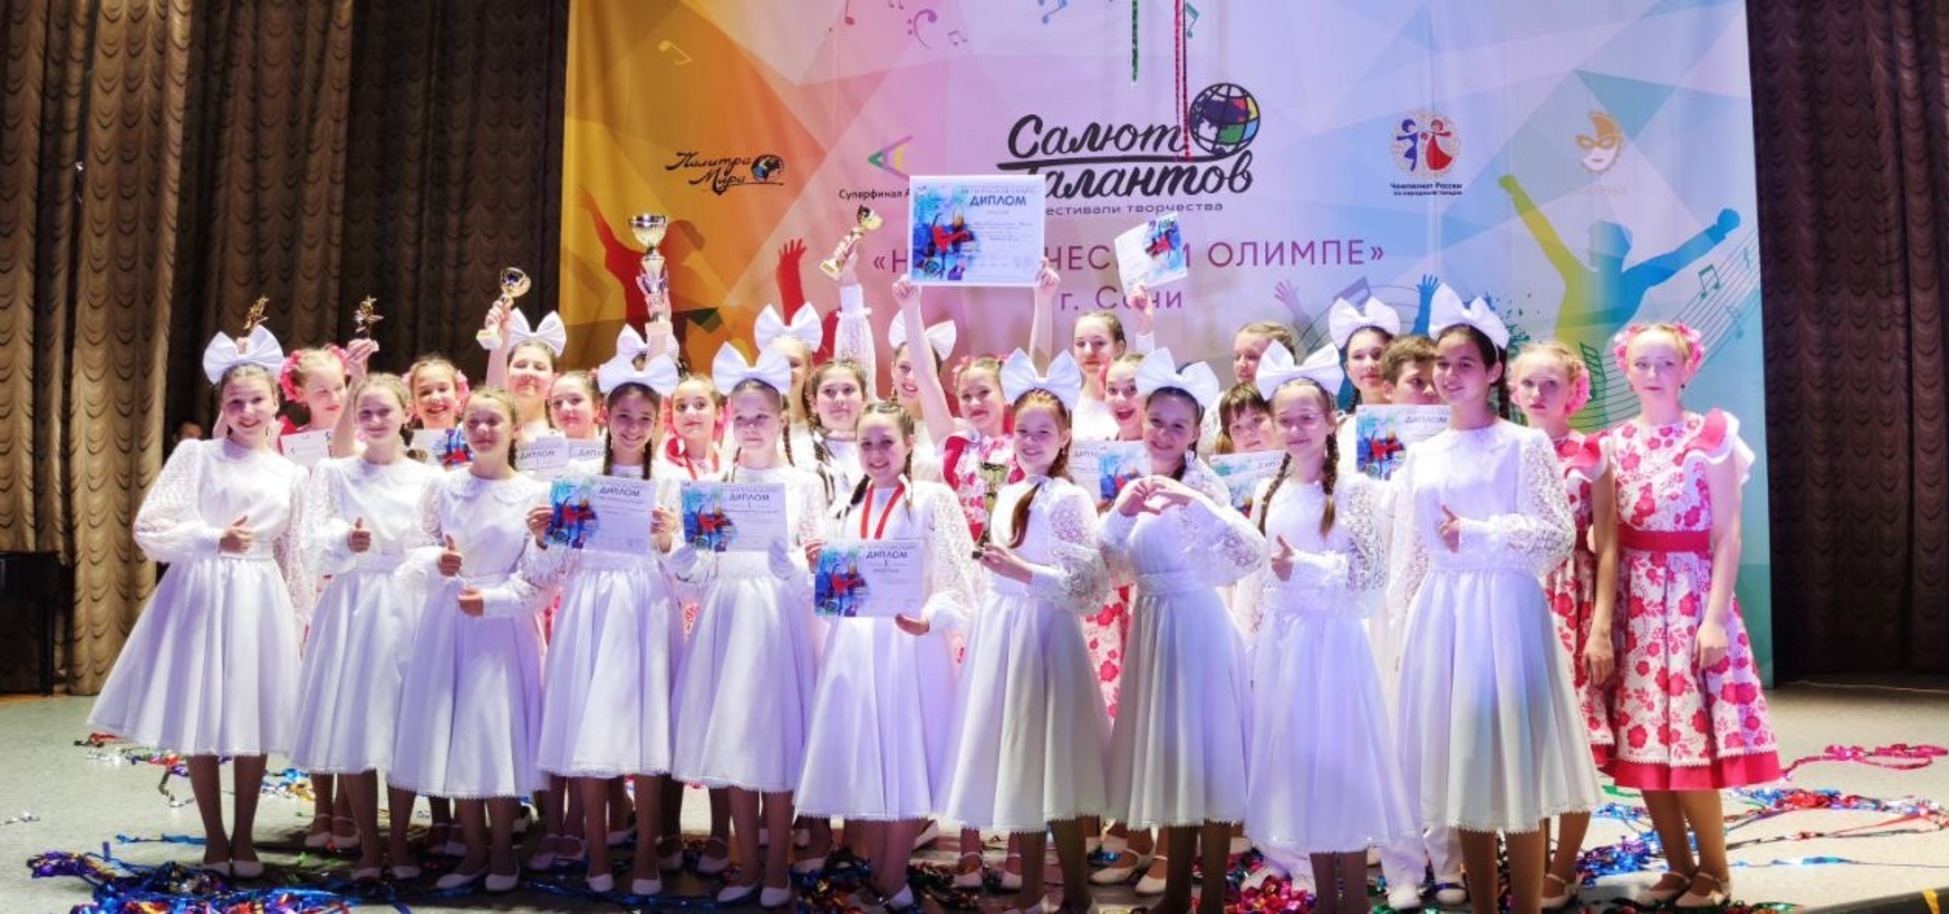 Челнинский хор «Детство» - обладатель Гран-при конкурса «На творческом Олимпе»